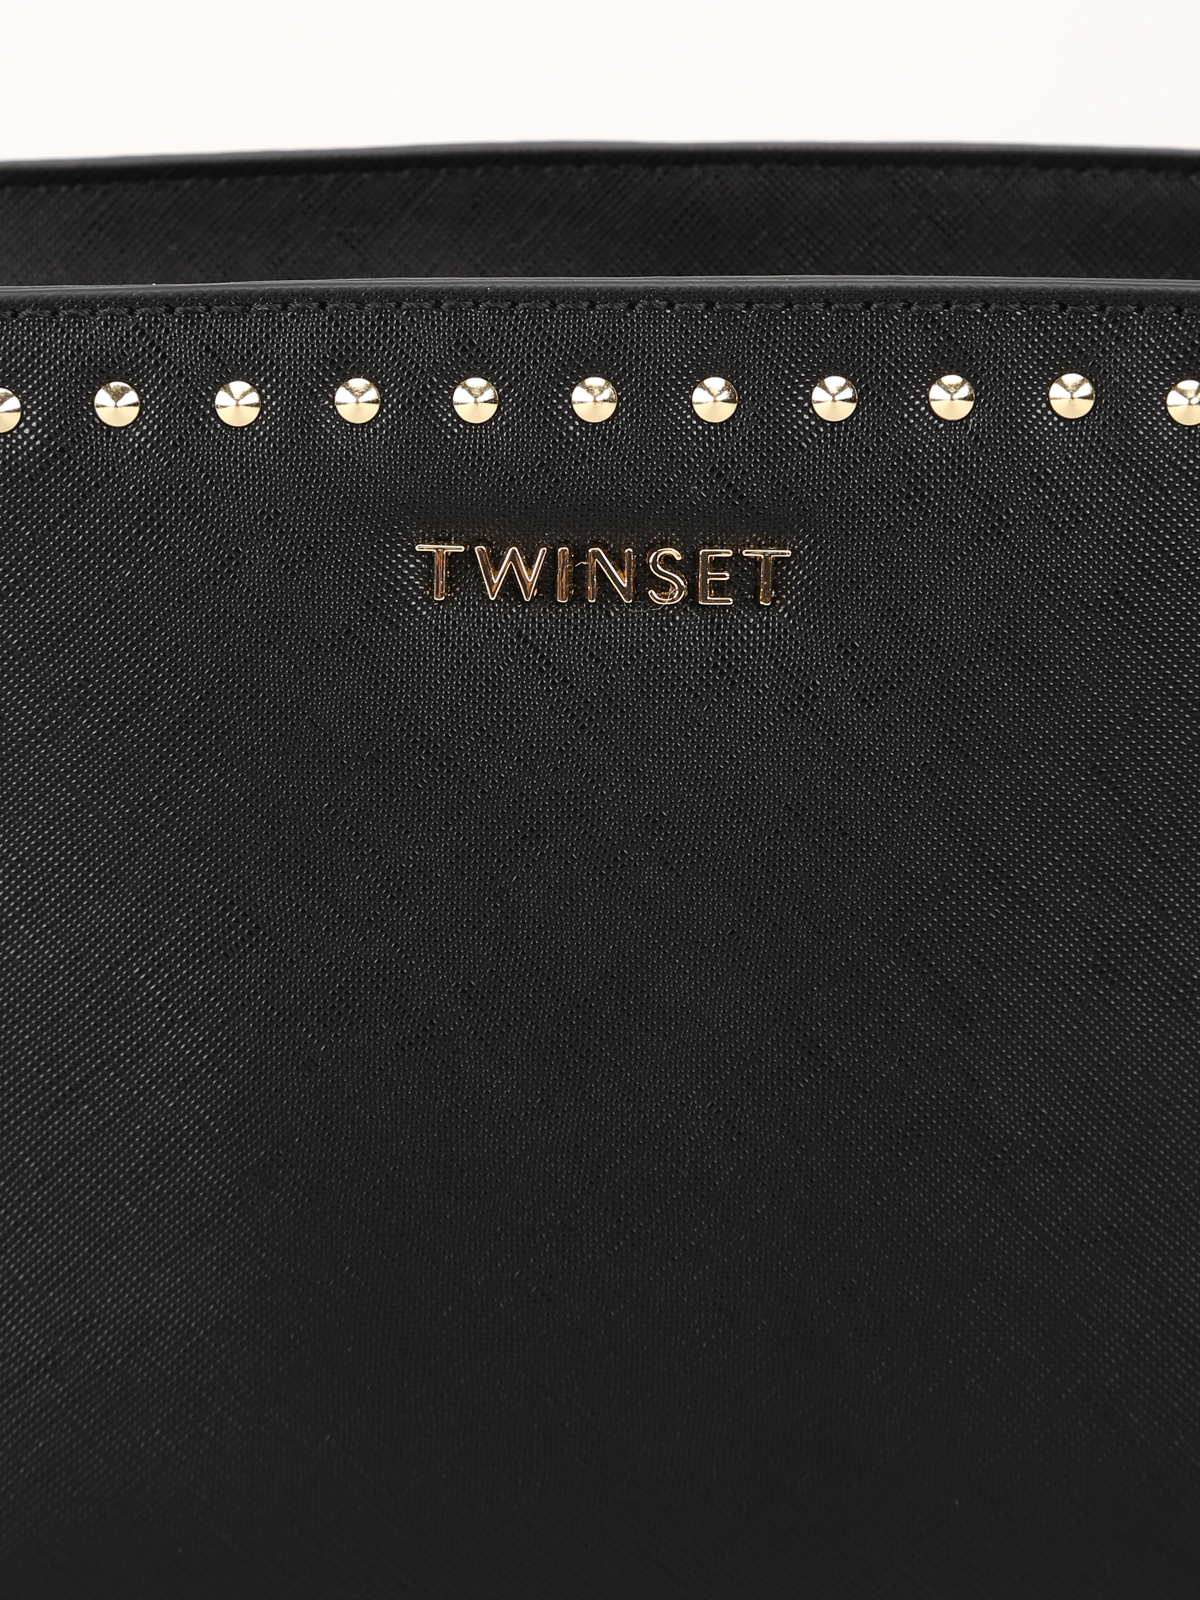 Twinset Crossbody Bags in Black